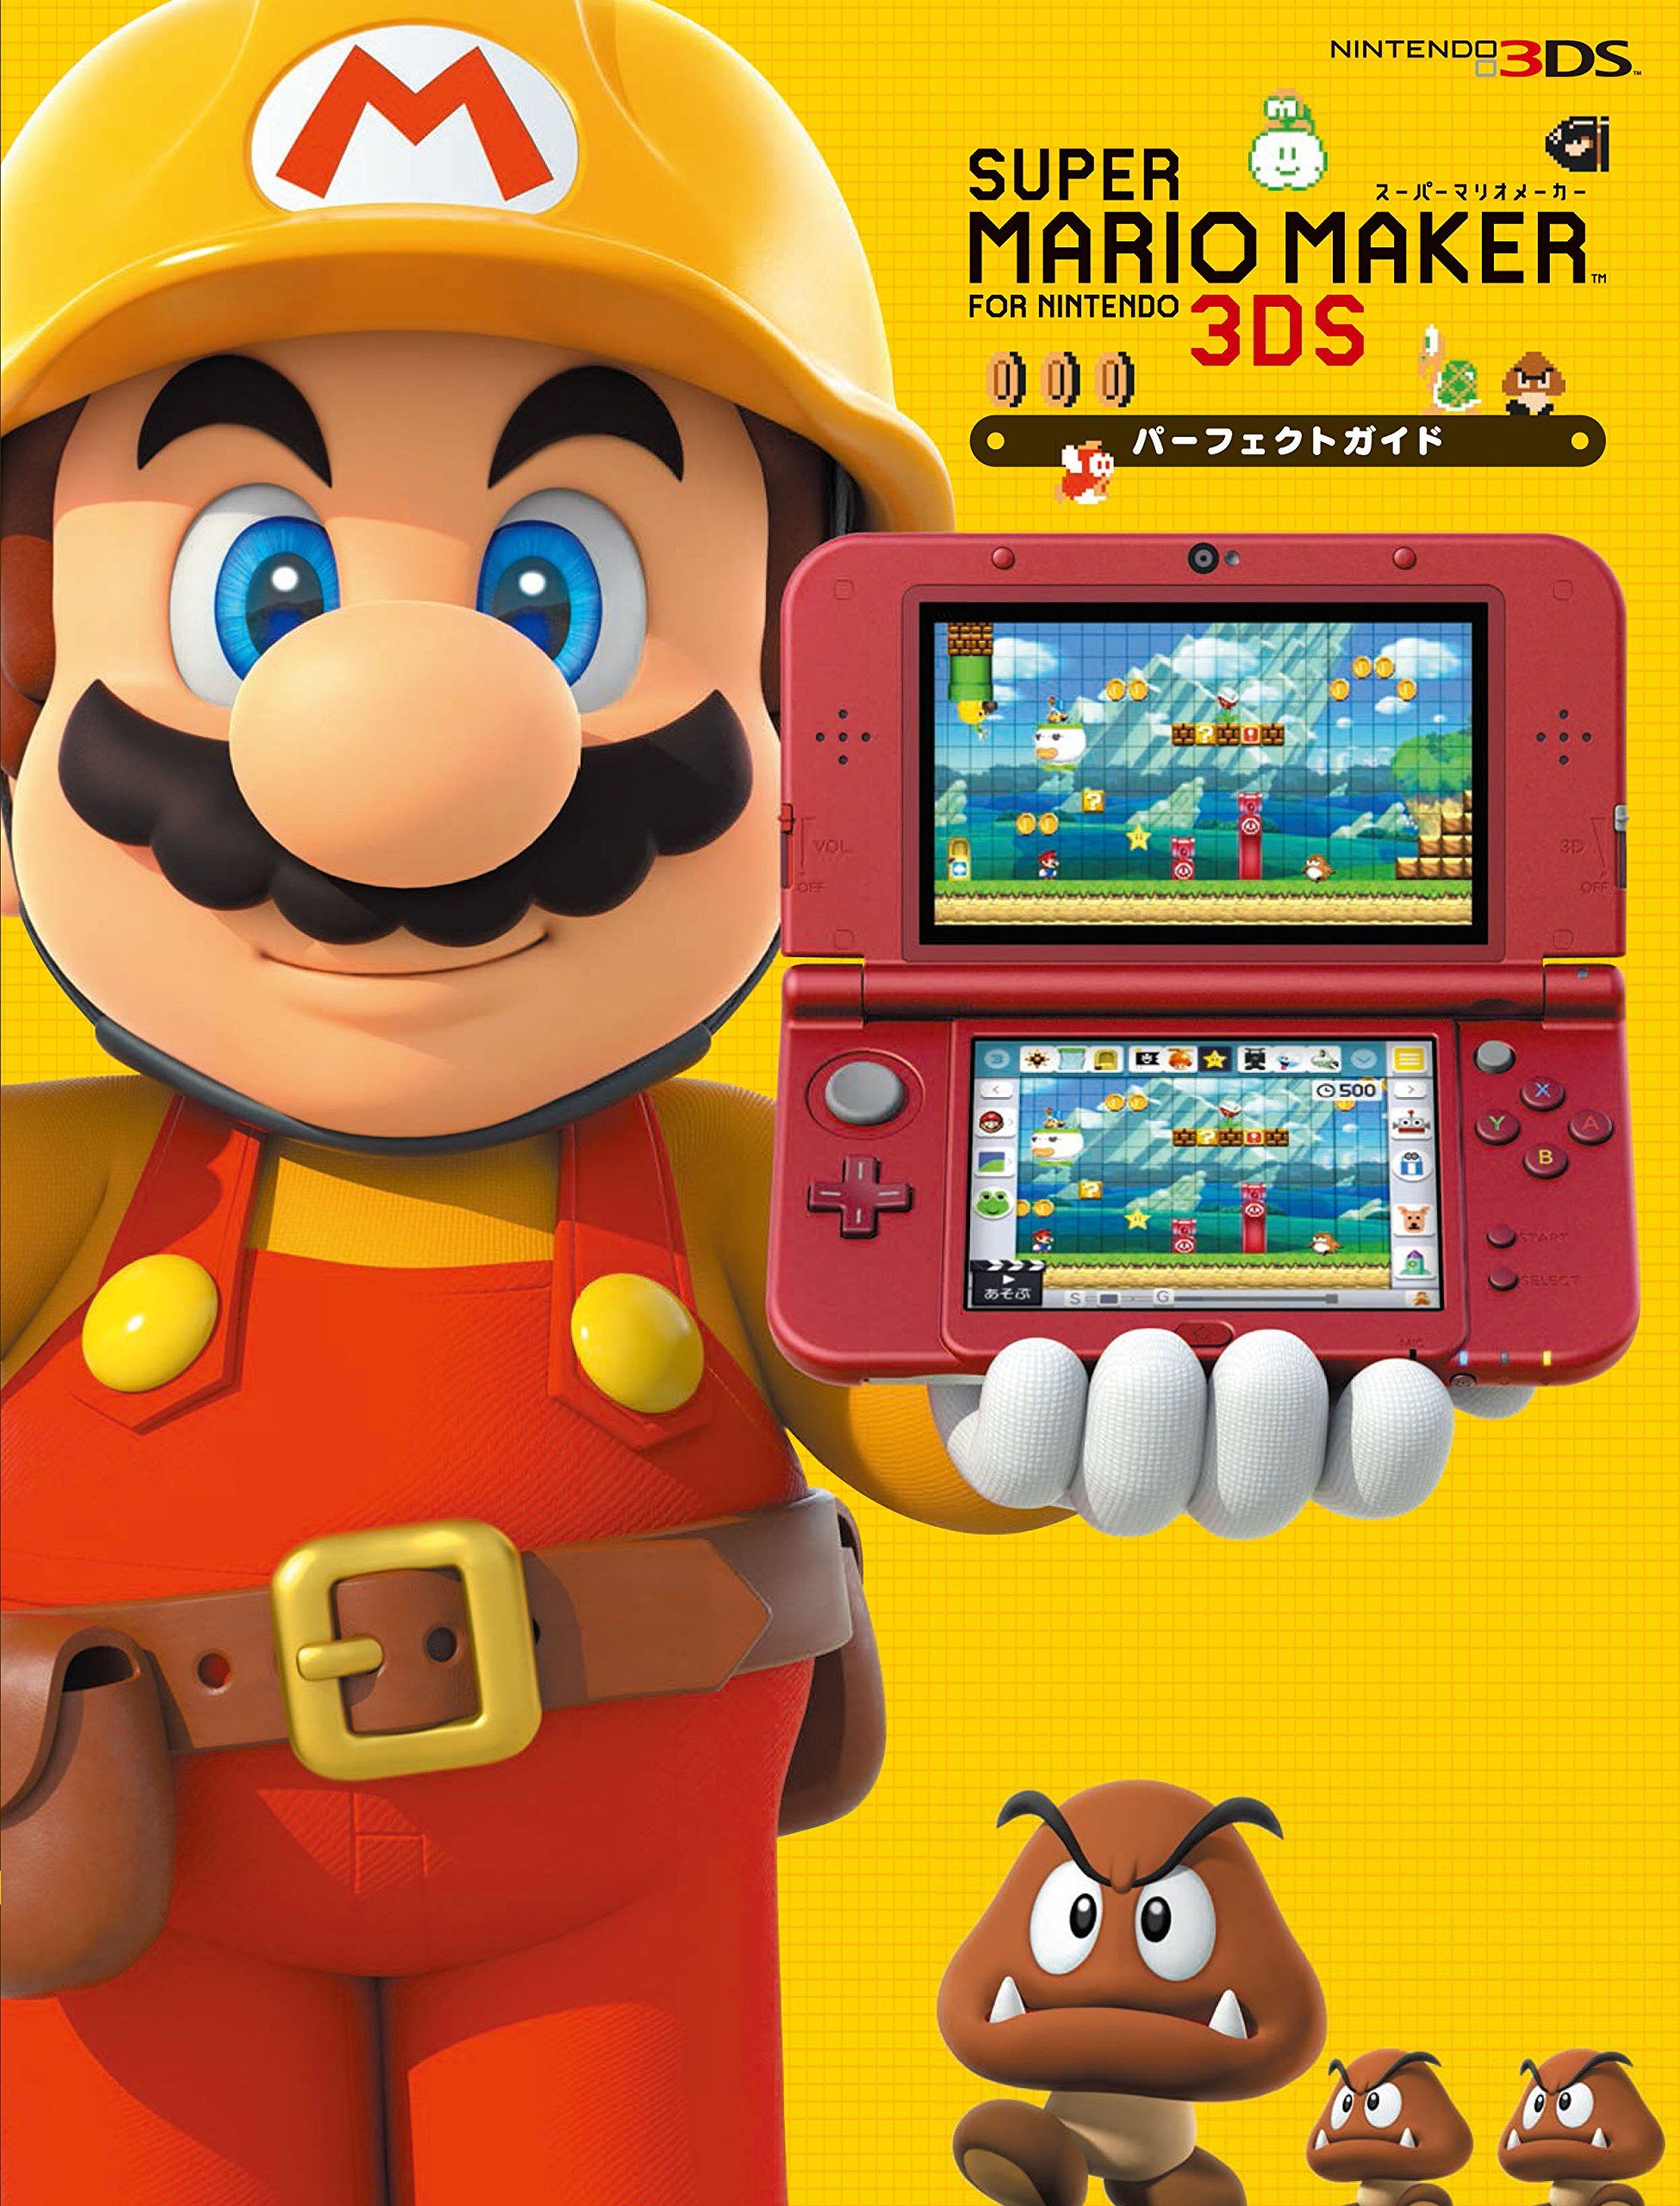 Difuminar Ir a caminar perfil Super Mario Maker for Nintendo 3DS Perfect Guide